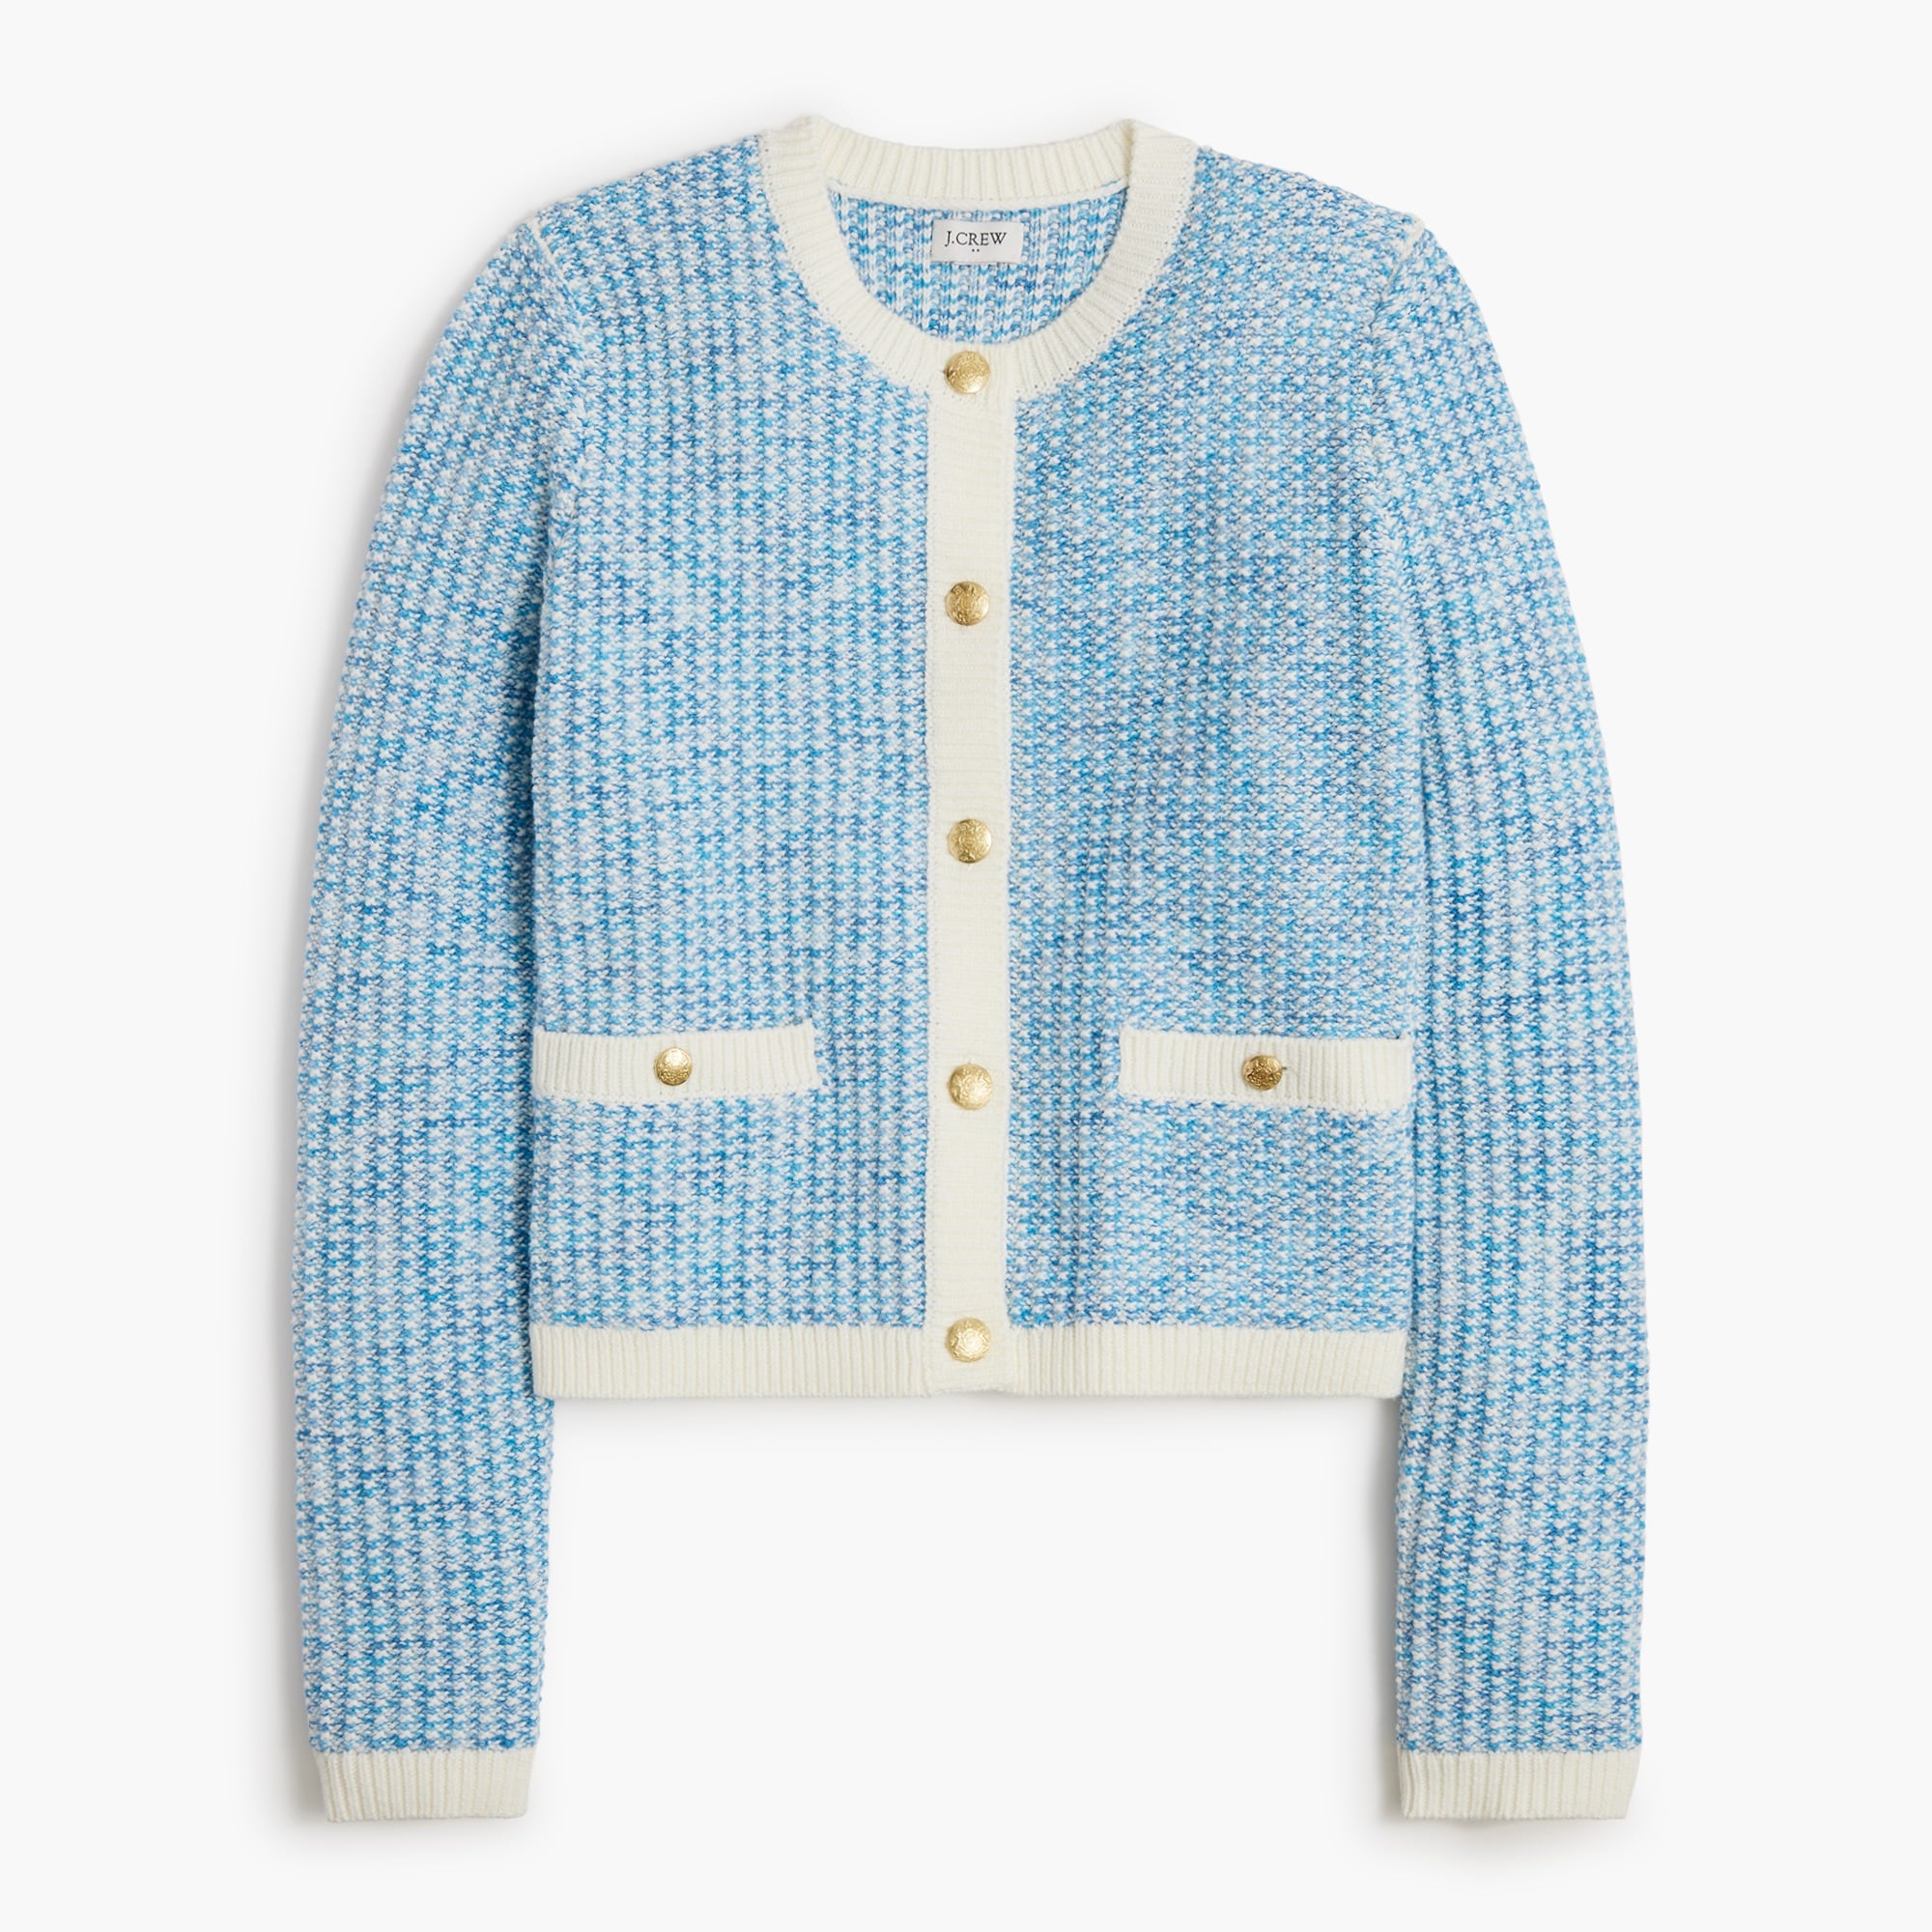  Popcorn-stitch lady jacket cardigan sweater